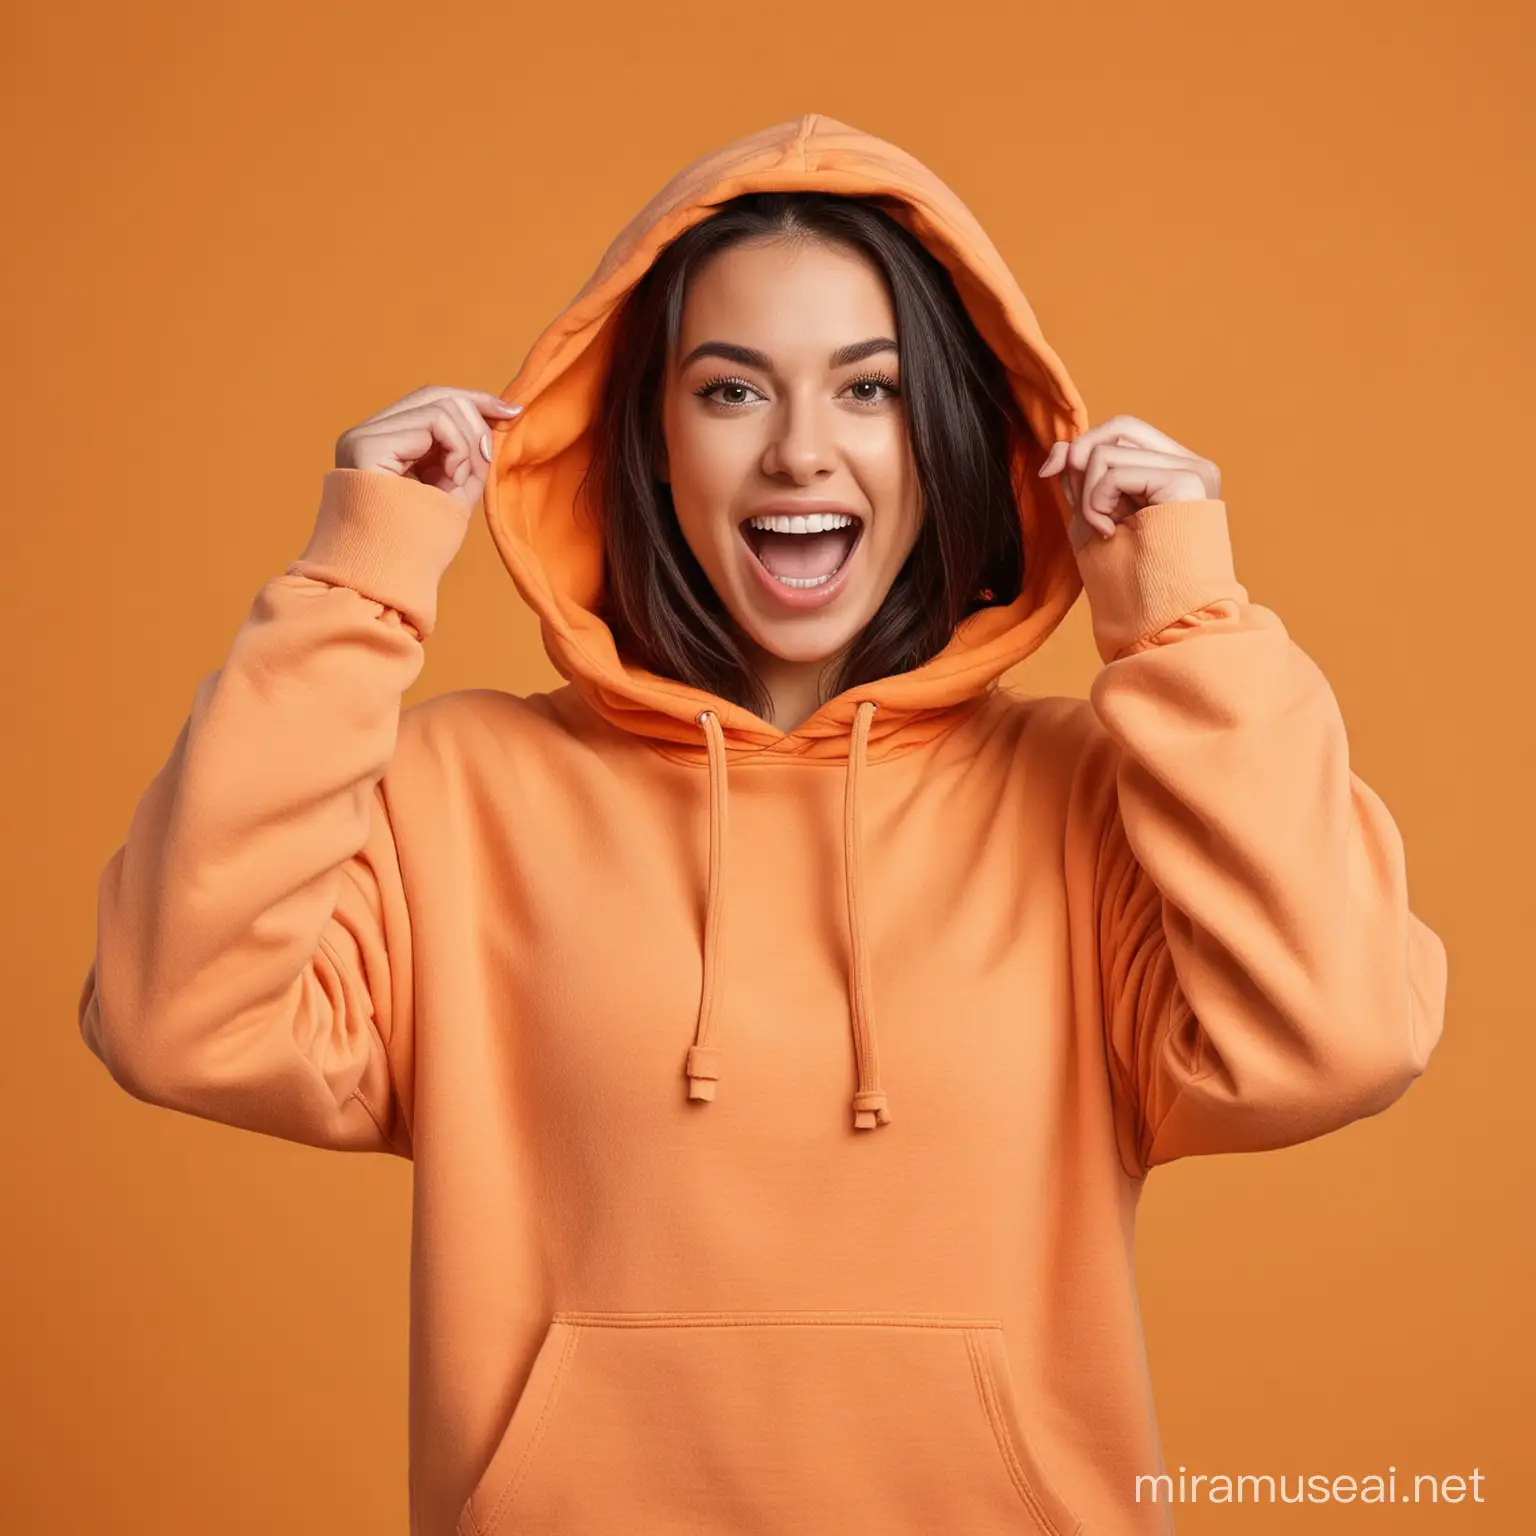 Joyful Women in Plush Hoodies with Vibrant Orange Backdrop